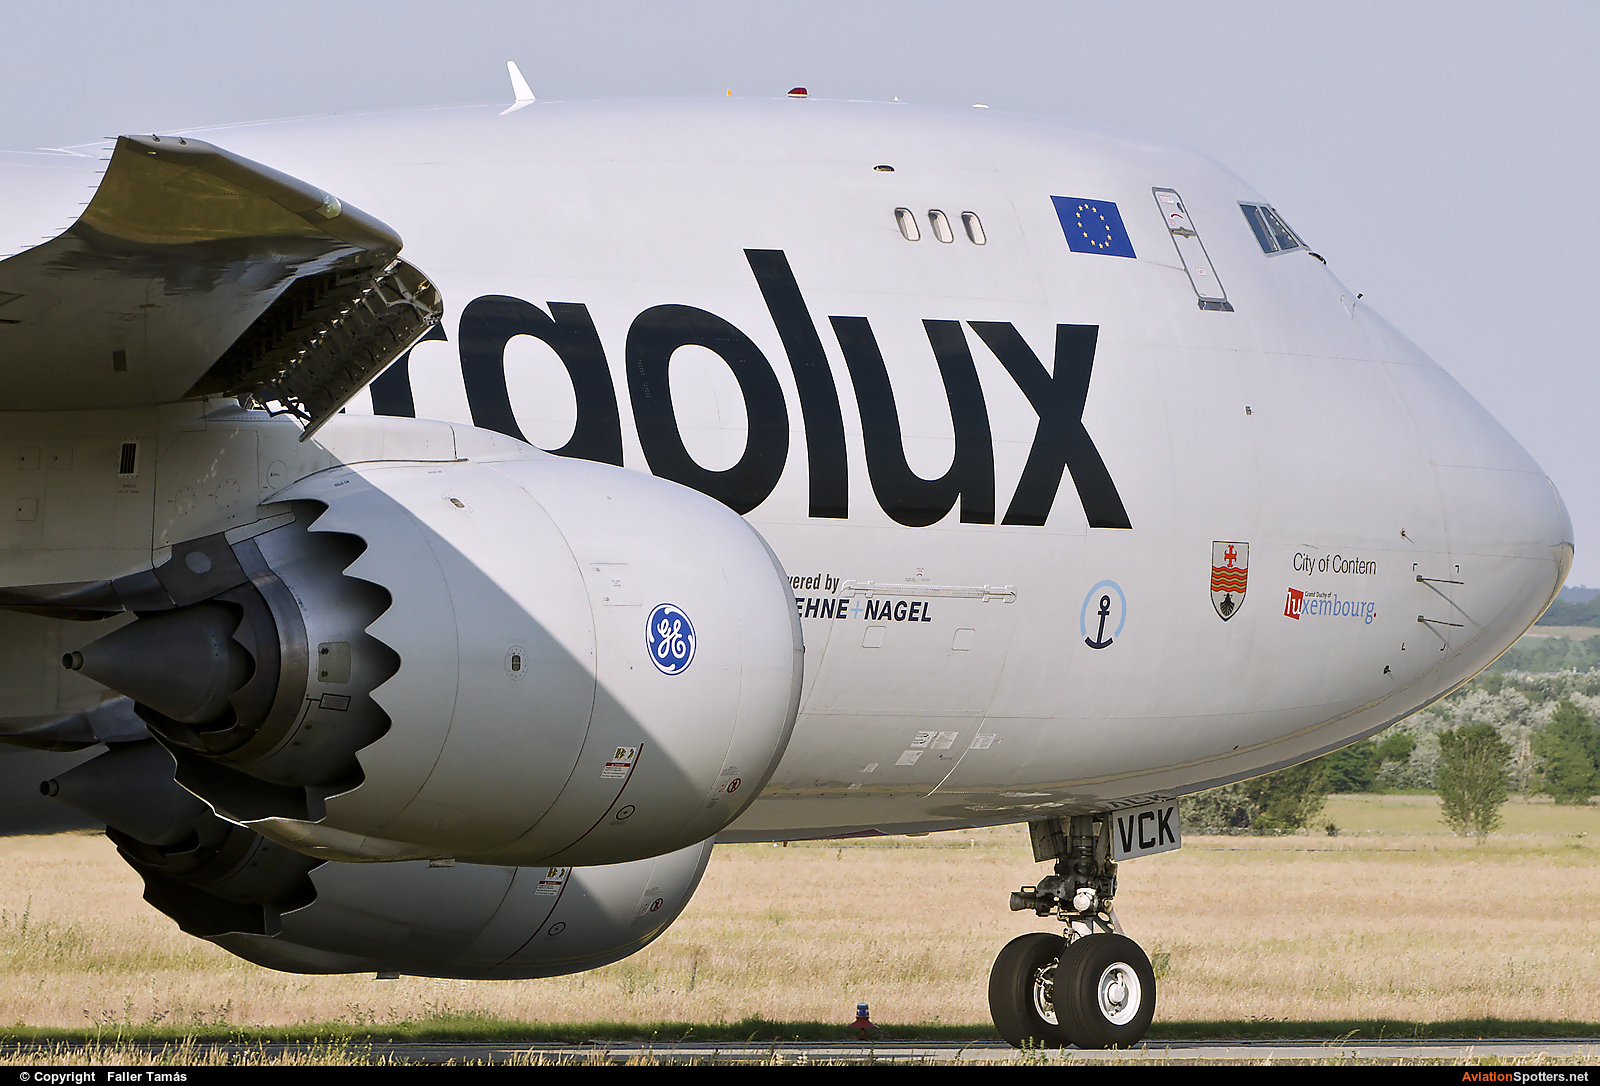 Cargolux  -  747-8F  (LX-VCK) By Faller Tamás (fallto78)